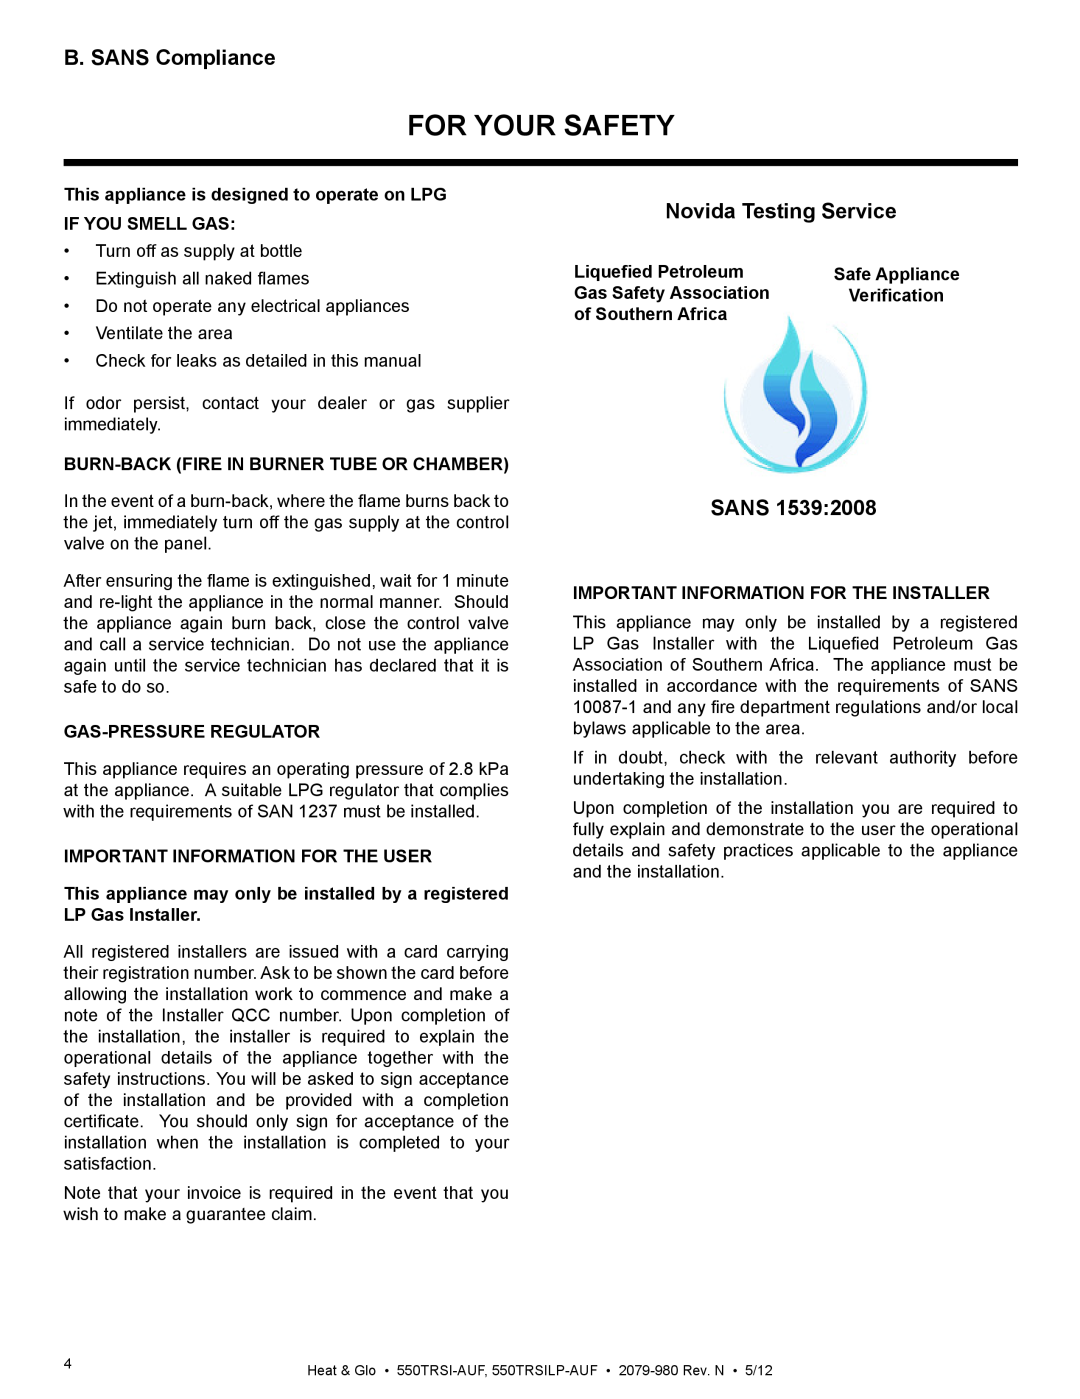 Heat & Glo LifeStyle 550TRSI-AUF owner manual For Your Safety, B. SANS Compliance, Novida Testing Service, SANS 1539:2008 